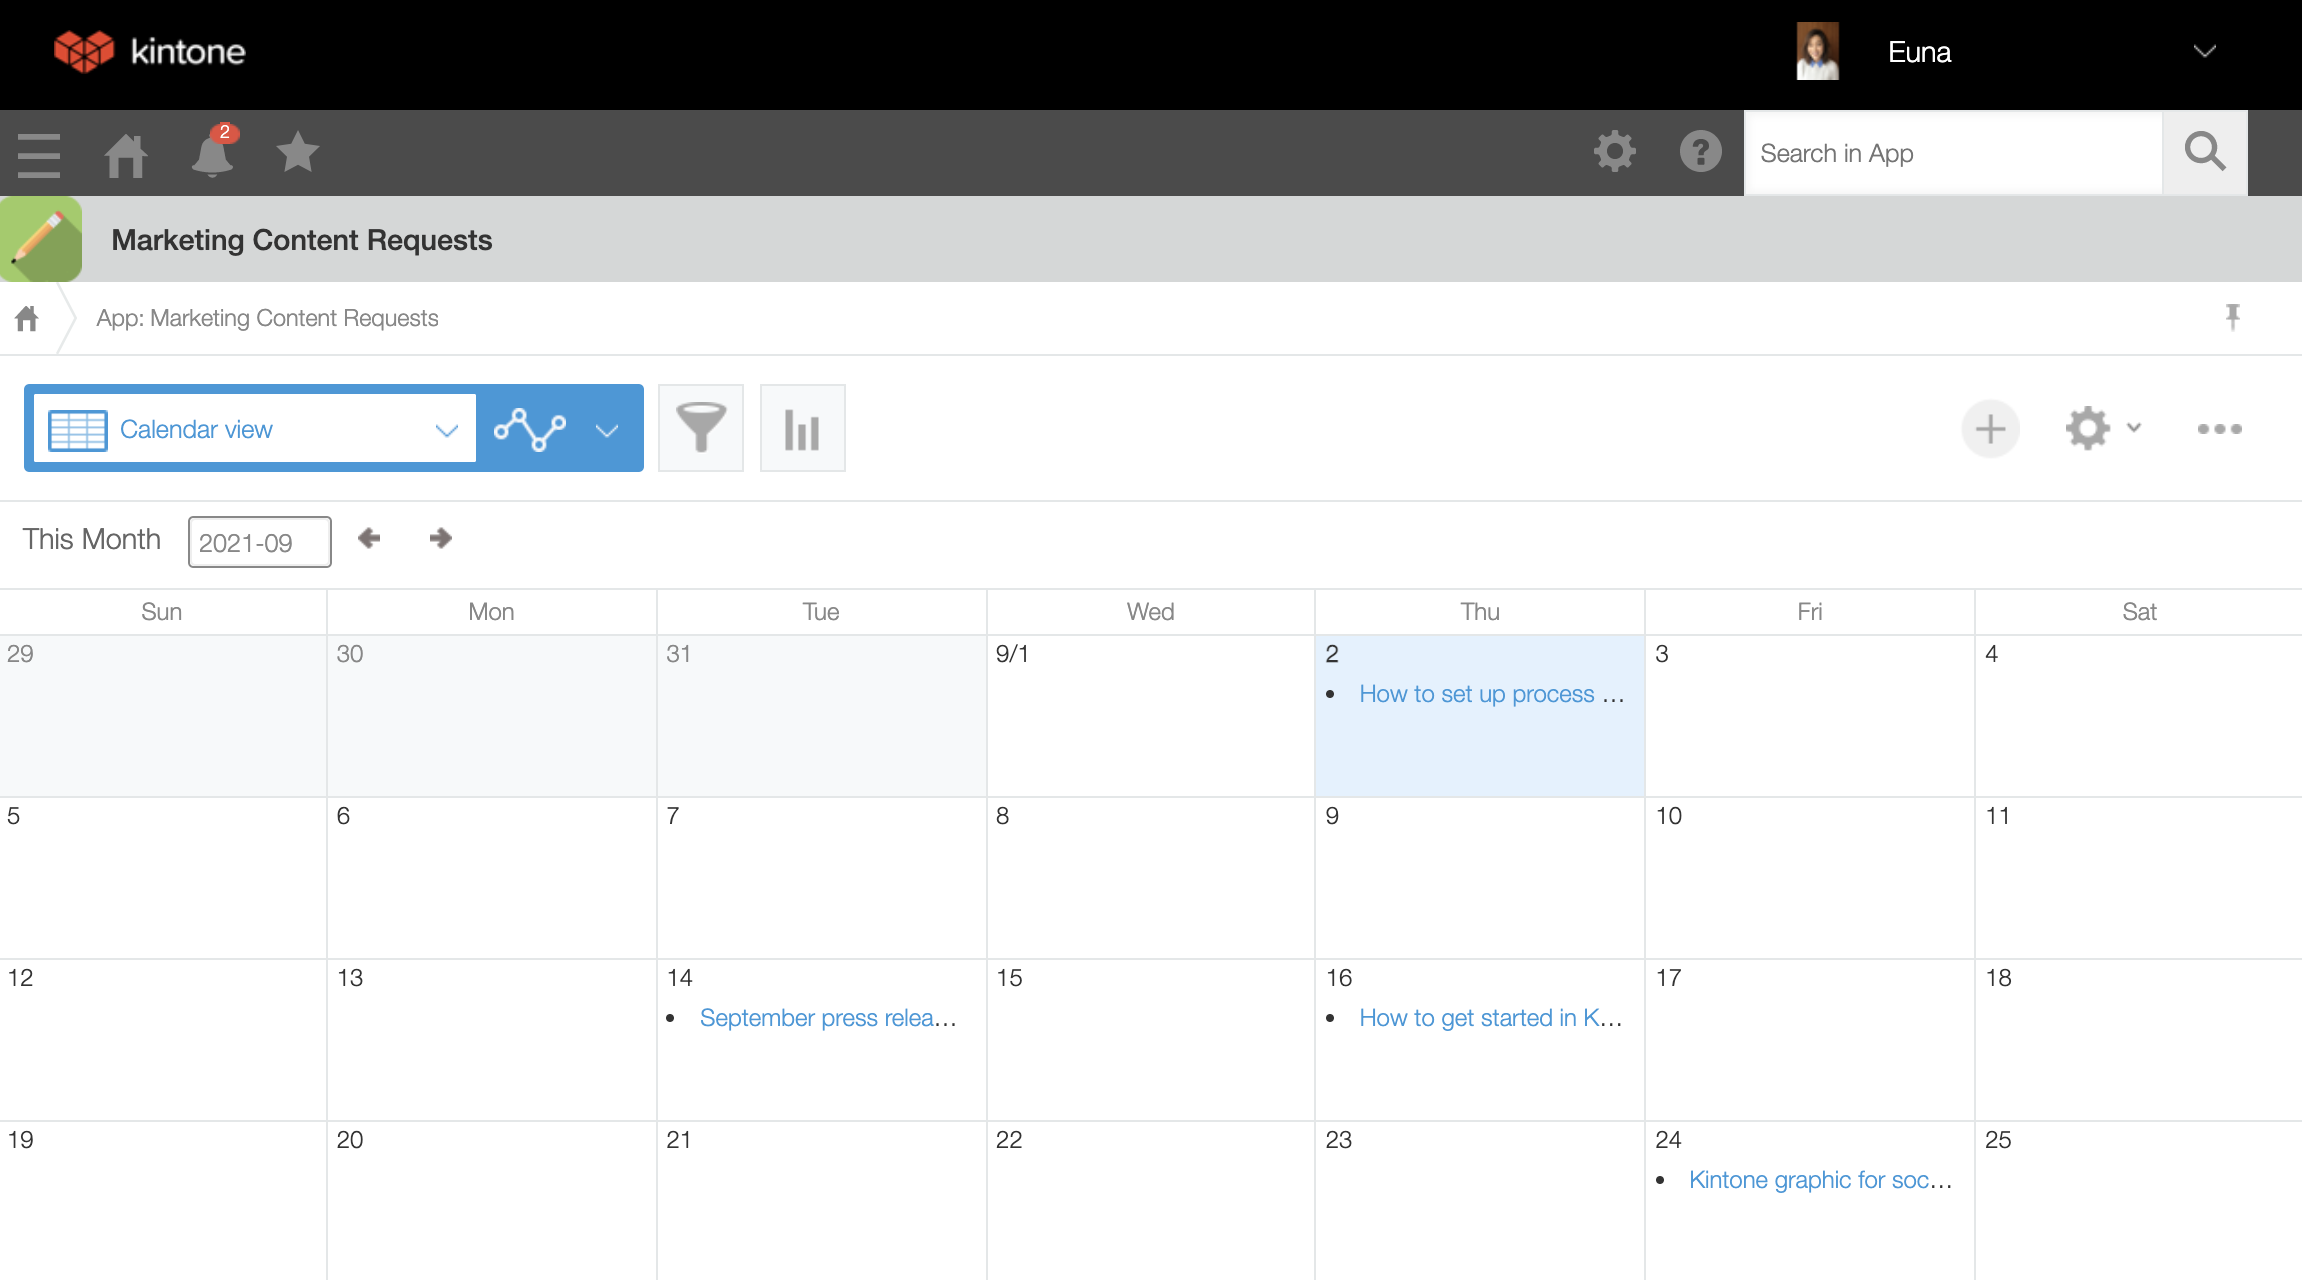 Content request - calendar view